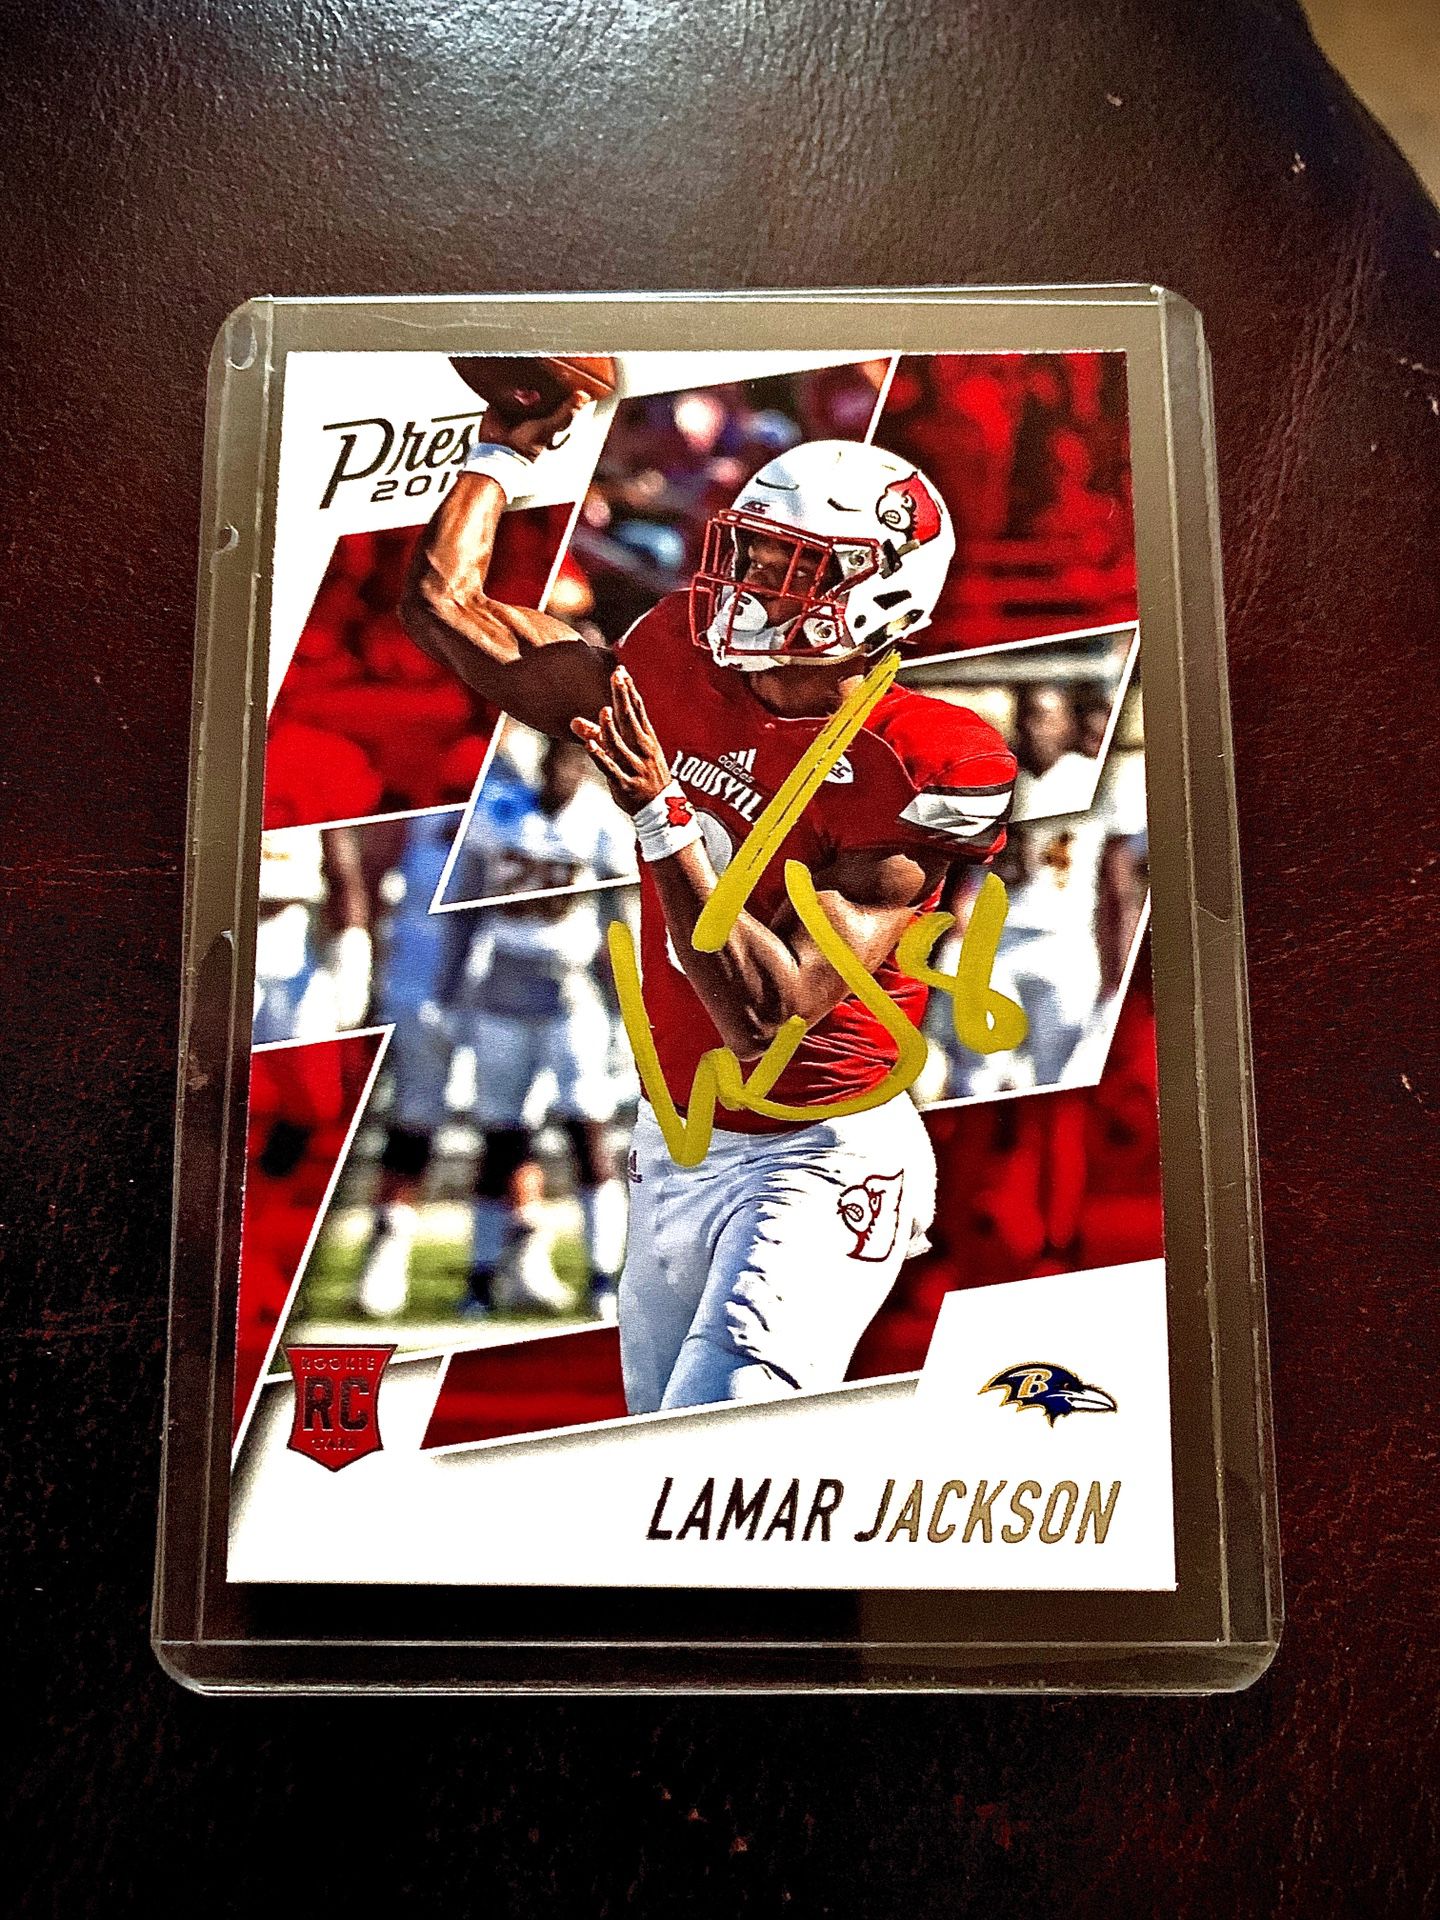 Lamar Jackson Autographed Rookie Card